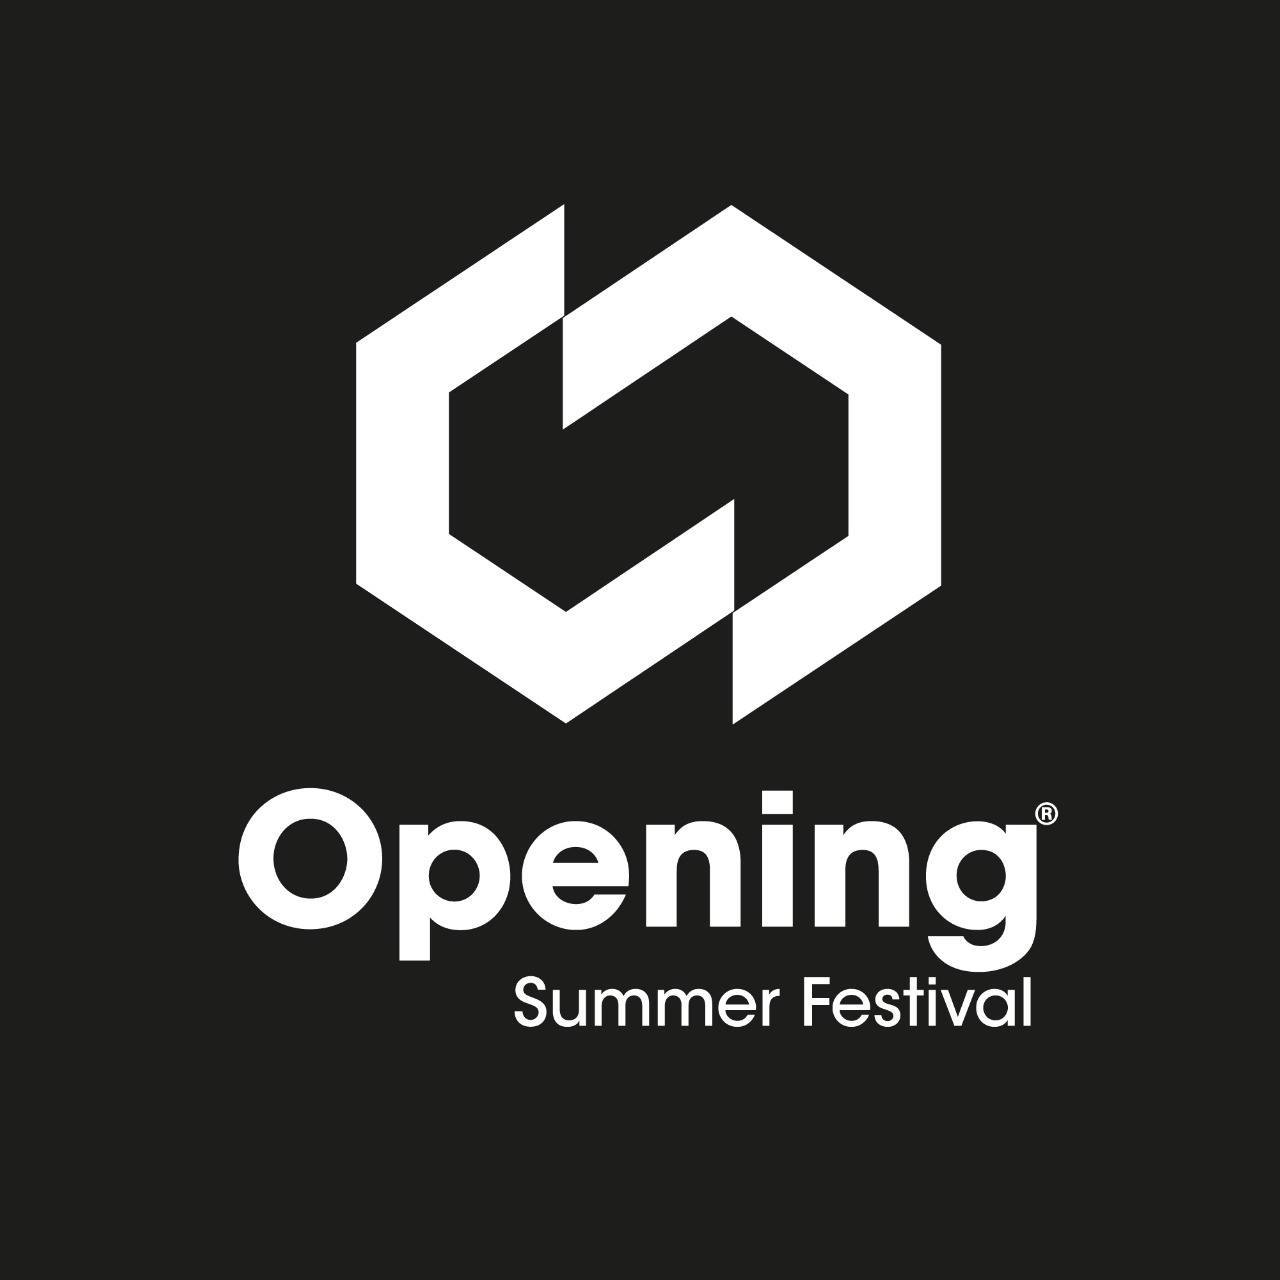 Opening Summer Festival